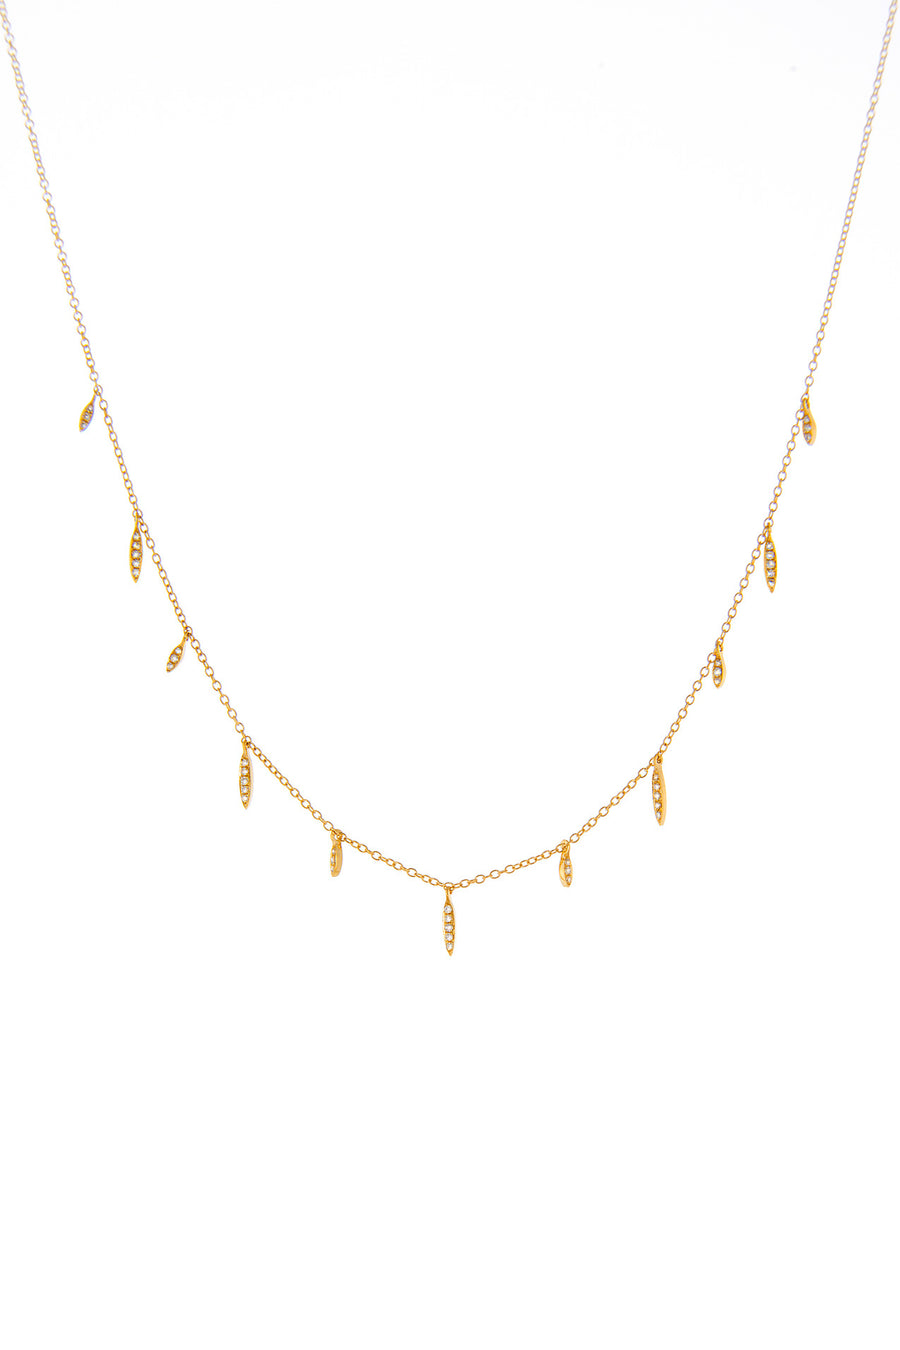 Multi-diamond drop necklace in 14k gold